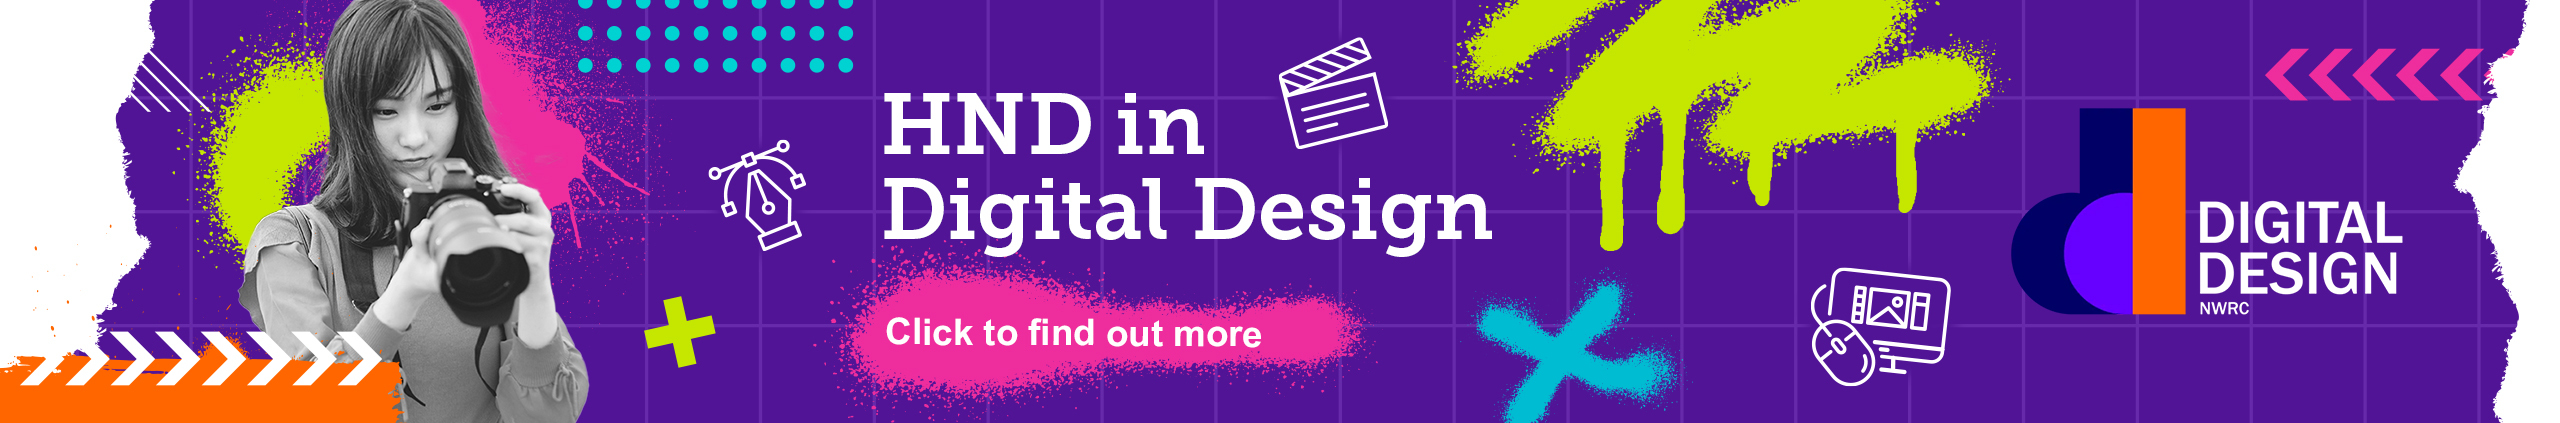 HND in Digital Design